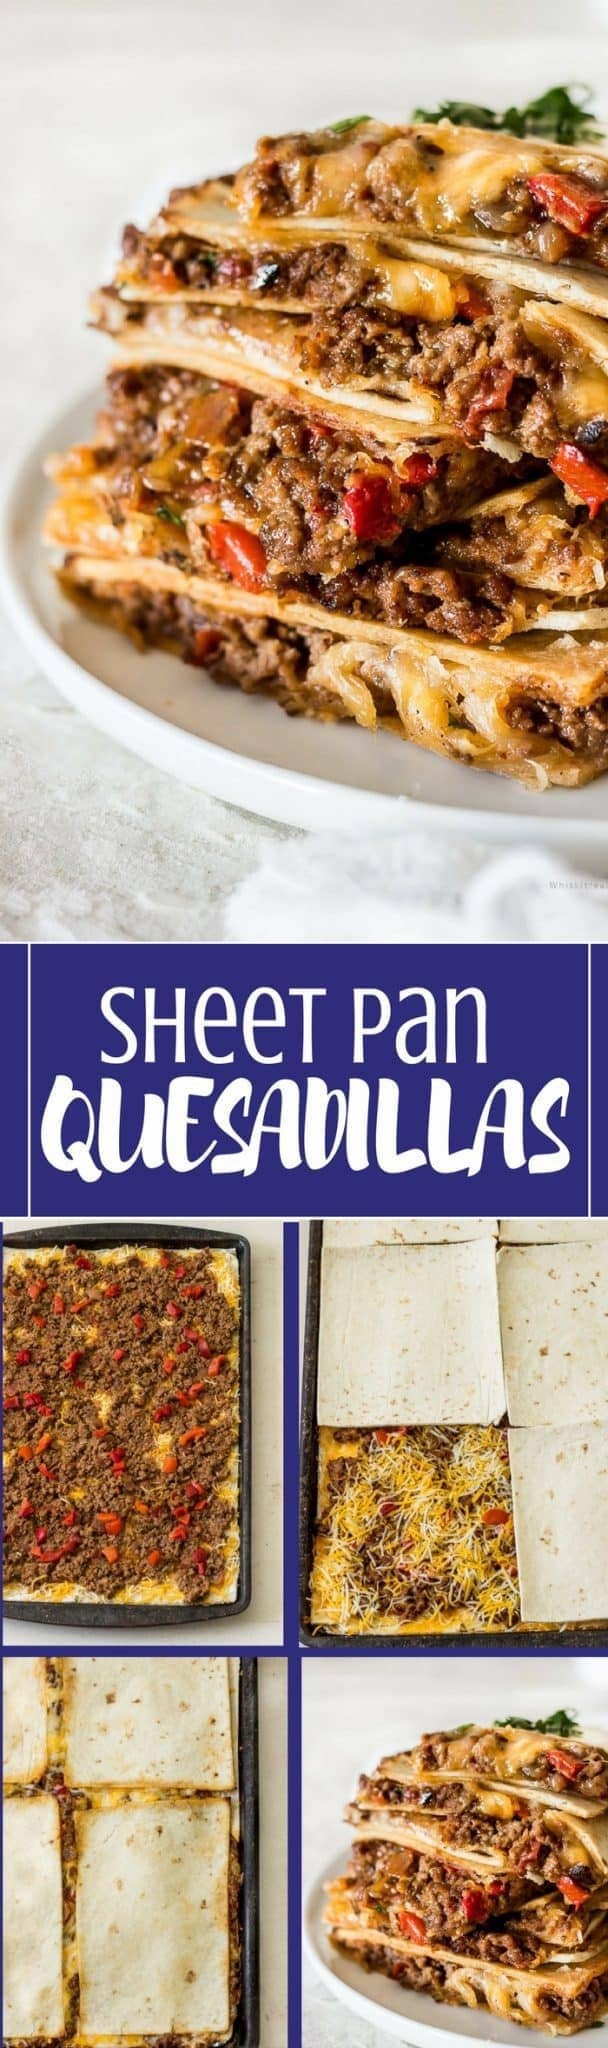 Sheet Pan Quesadillas
 Quesadillas